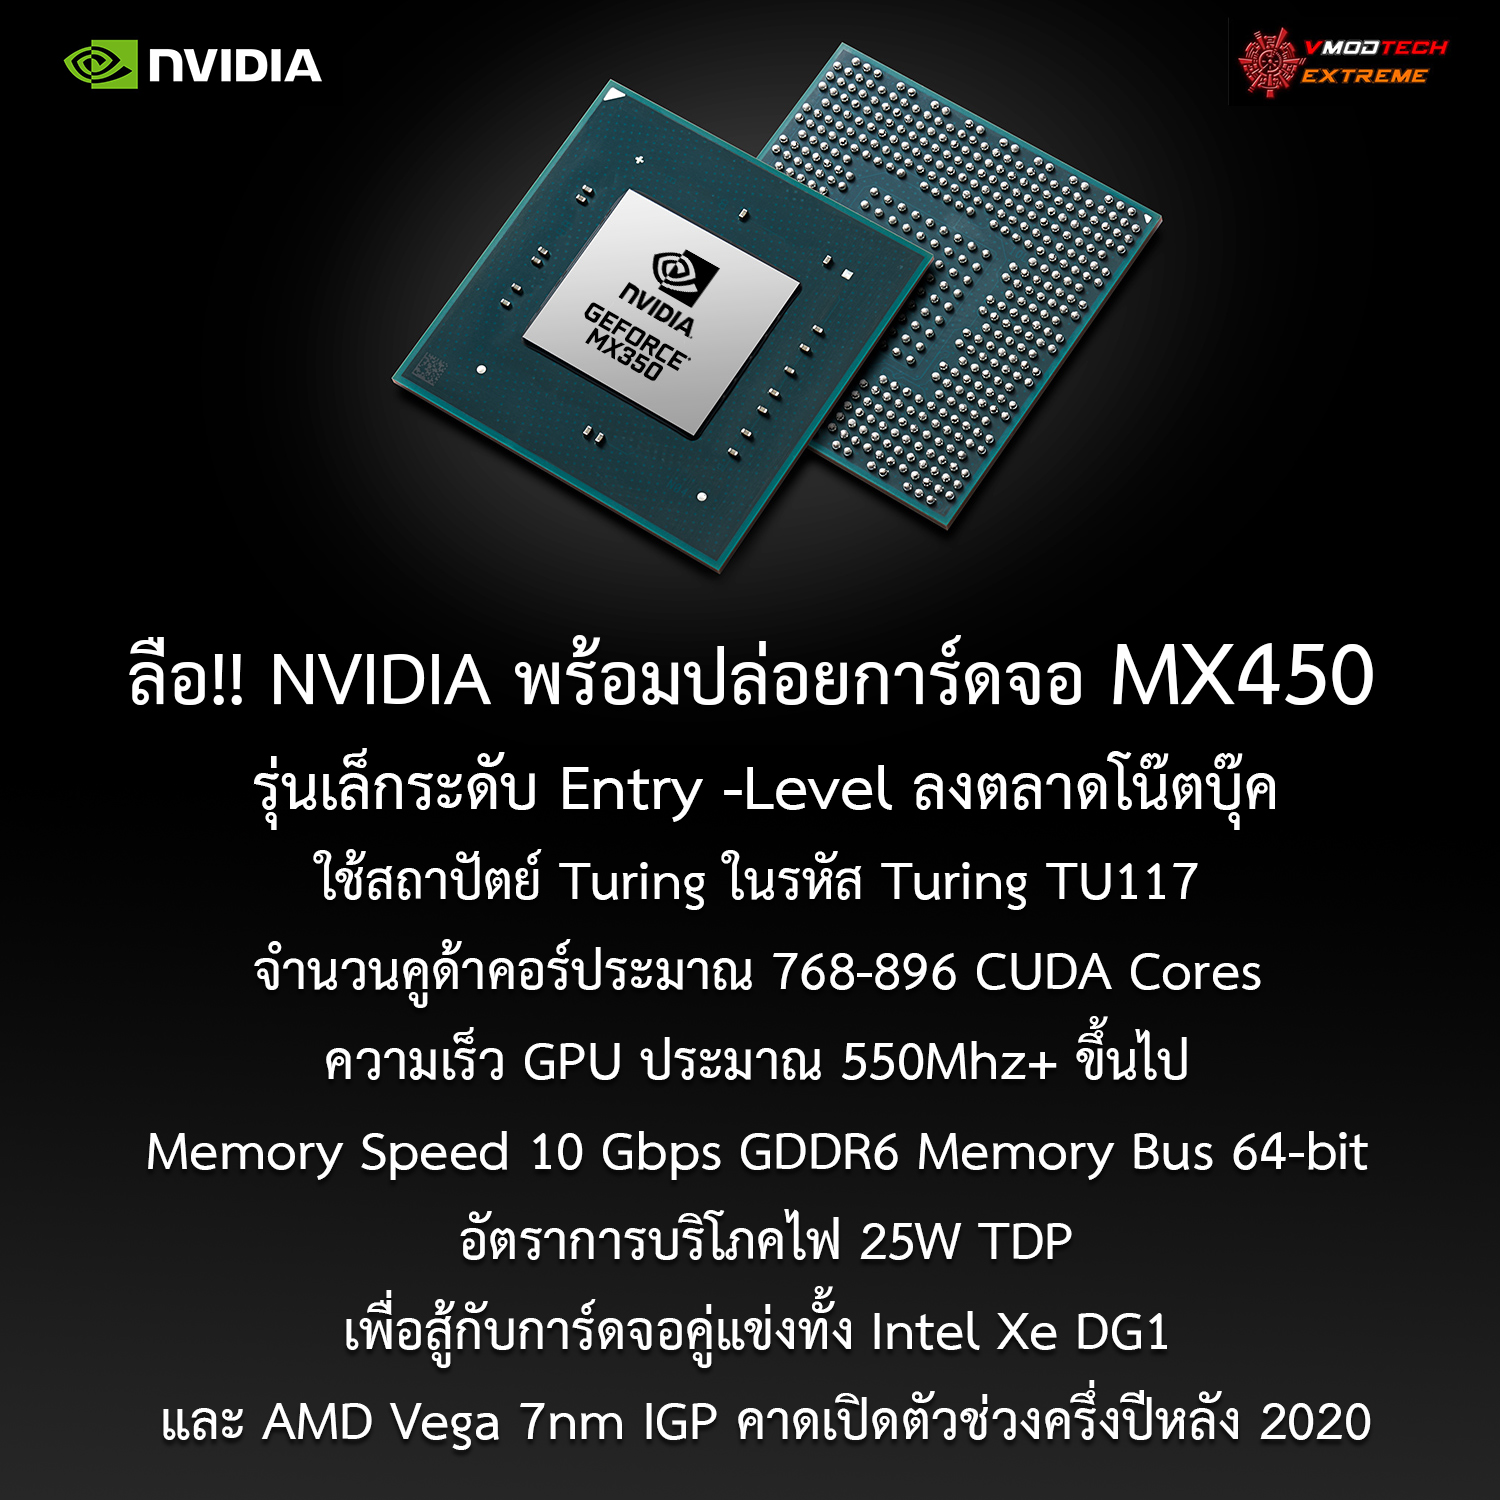 nvidia mx450 2020 ลือ!! NVIDIA พร้อมปล่อยการ์ดจอ MX450 รุ่นเล็กลงตลาดโน๊ตบุ๊คเพื่อสู้กับการ์ดจอคู่แข่งทั้ง Intel Xe DG1 และ AMD Vega 7nm IGP เร็วๆนี้